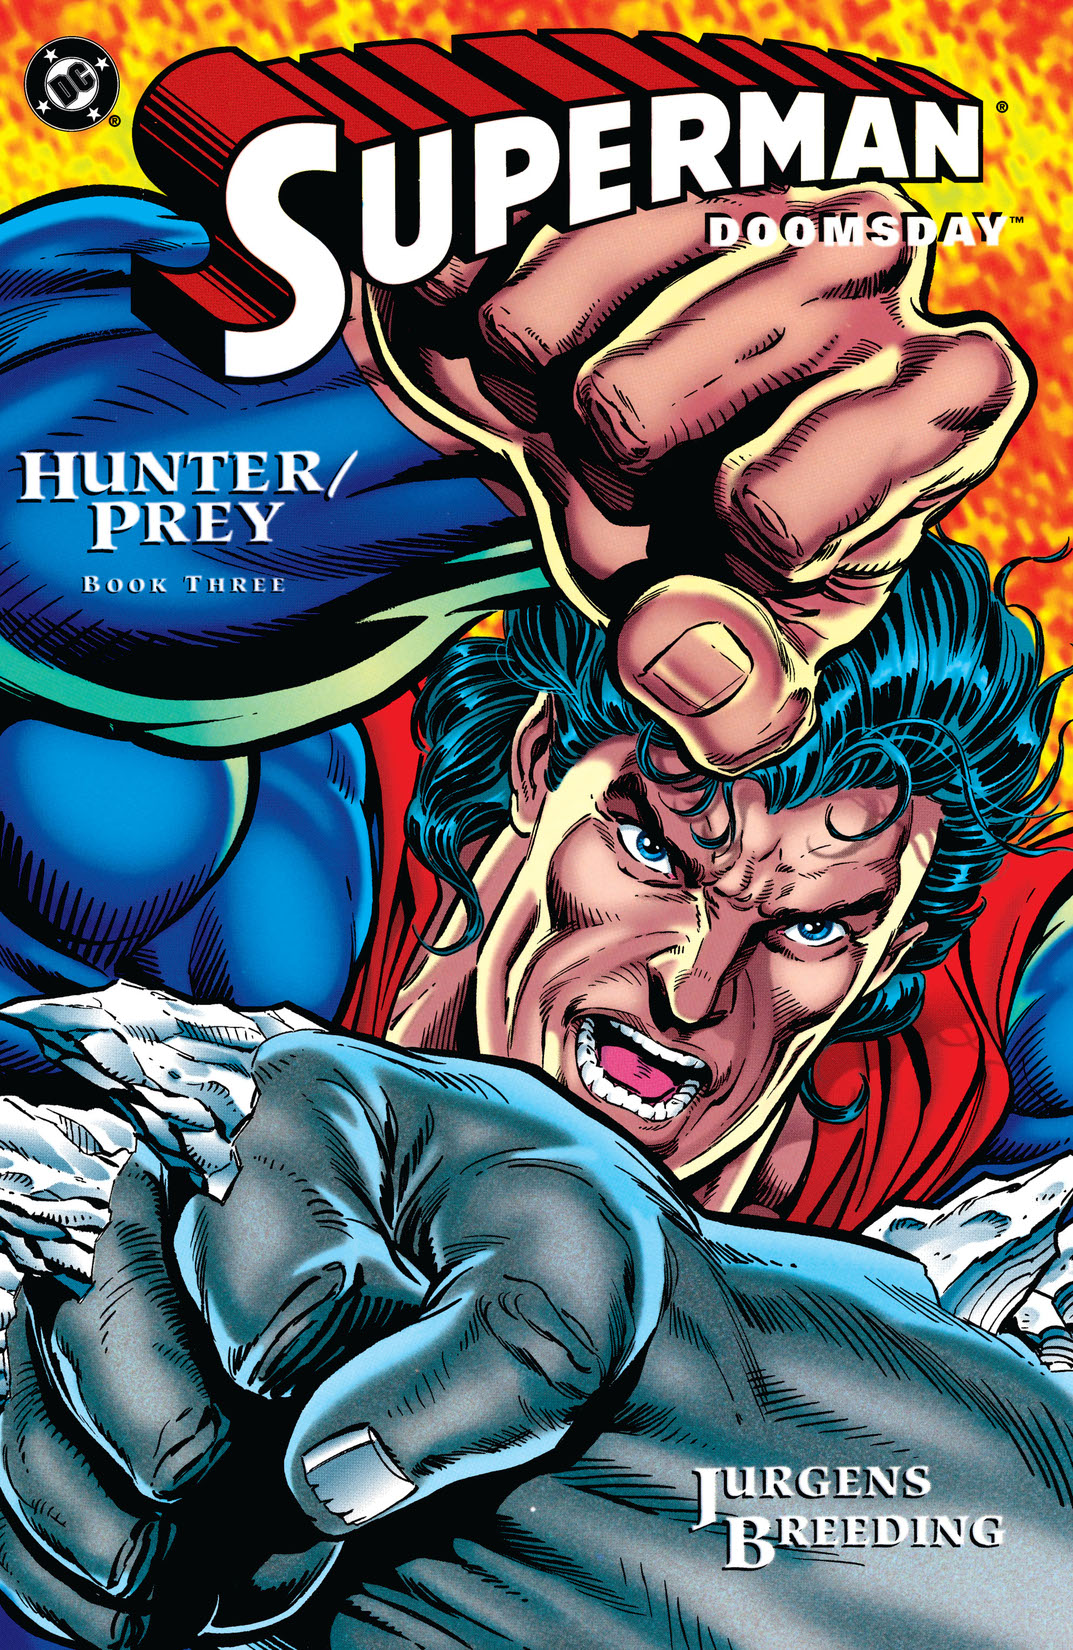 Superman/Doomsday: Hunter/Prey #3 preview images